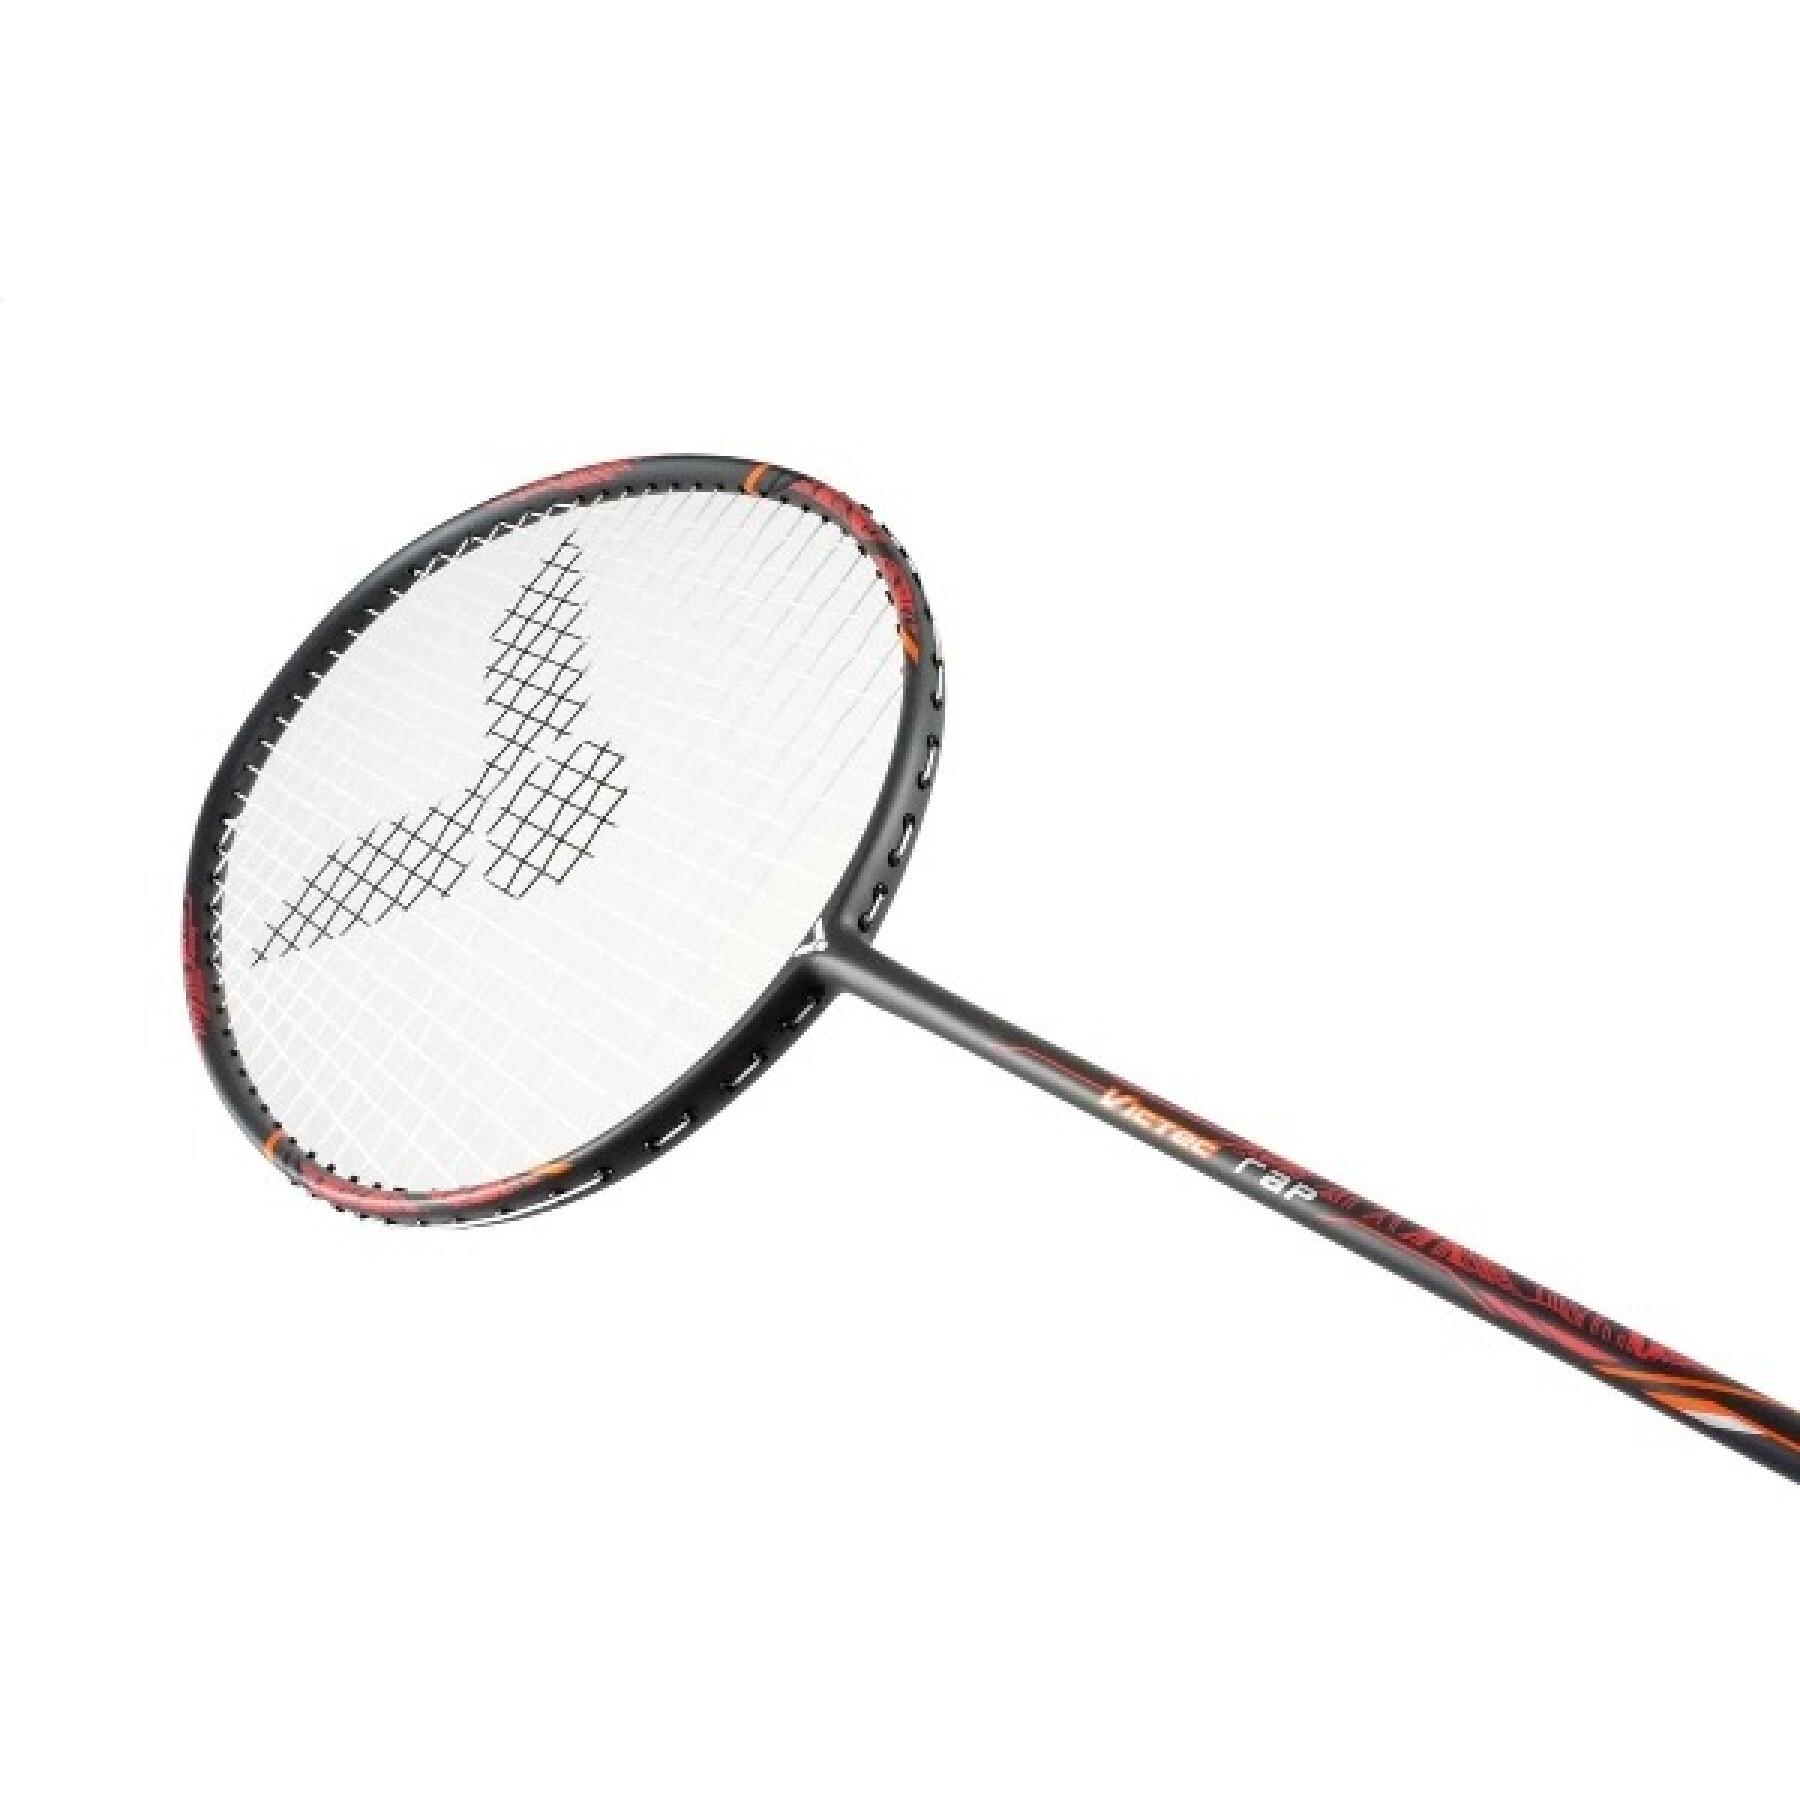 Badminton racket Victor Victec